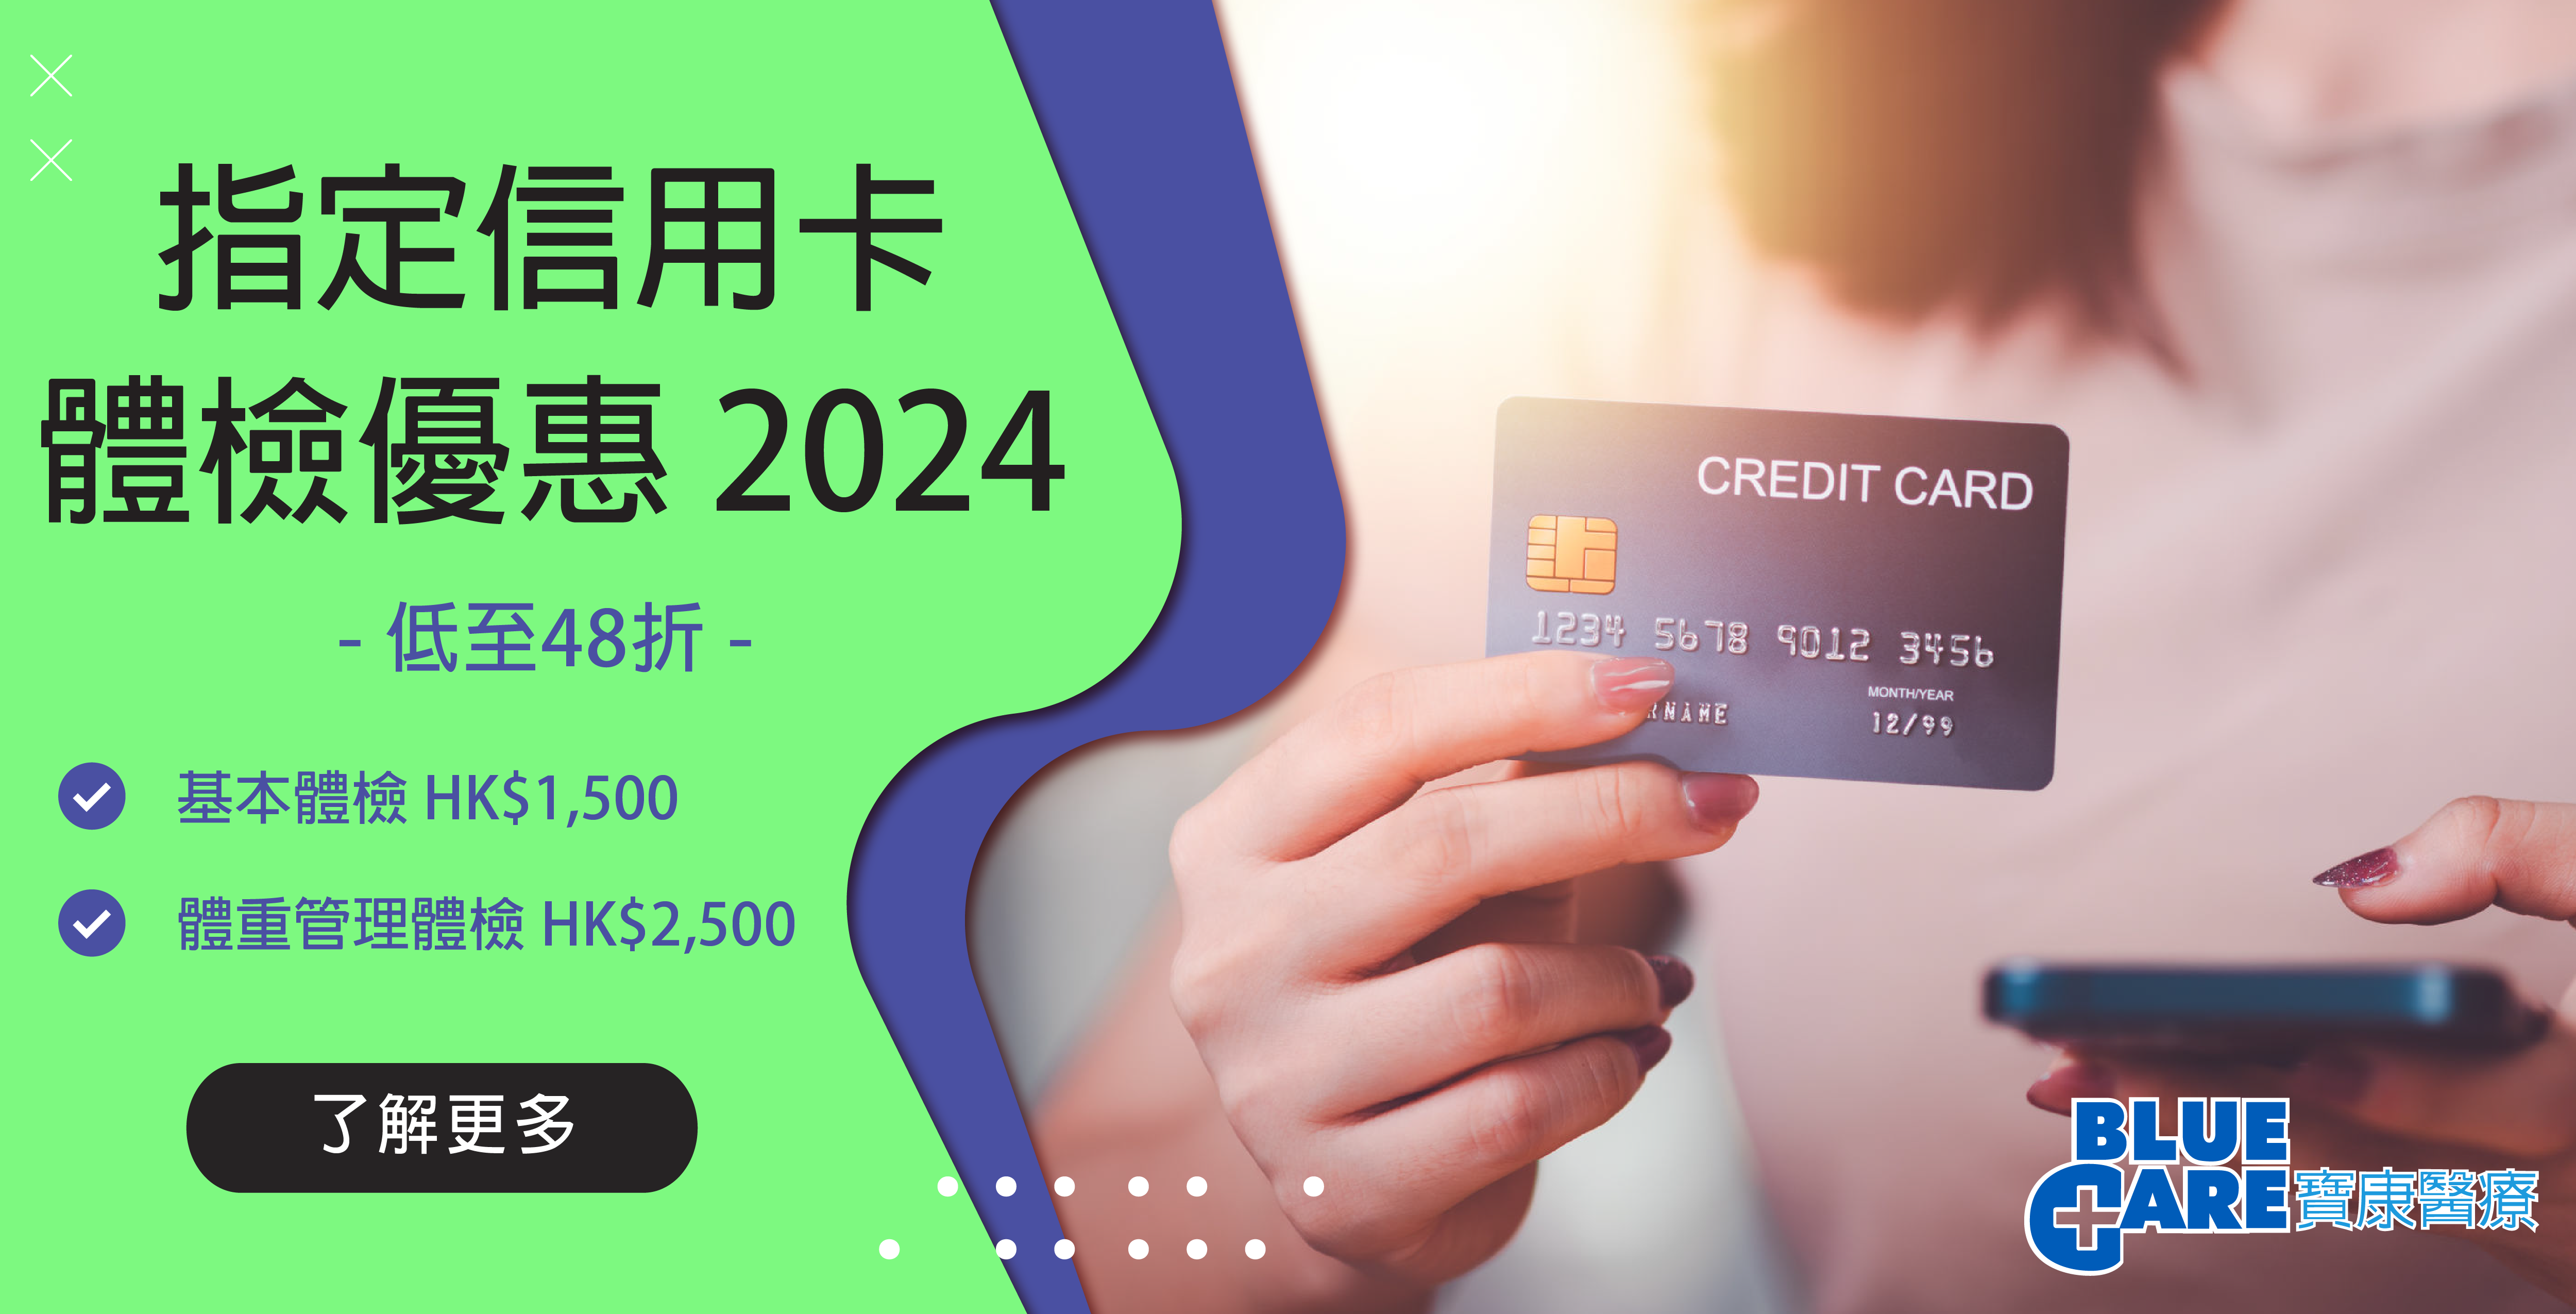 Credit Card offer 2024